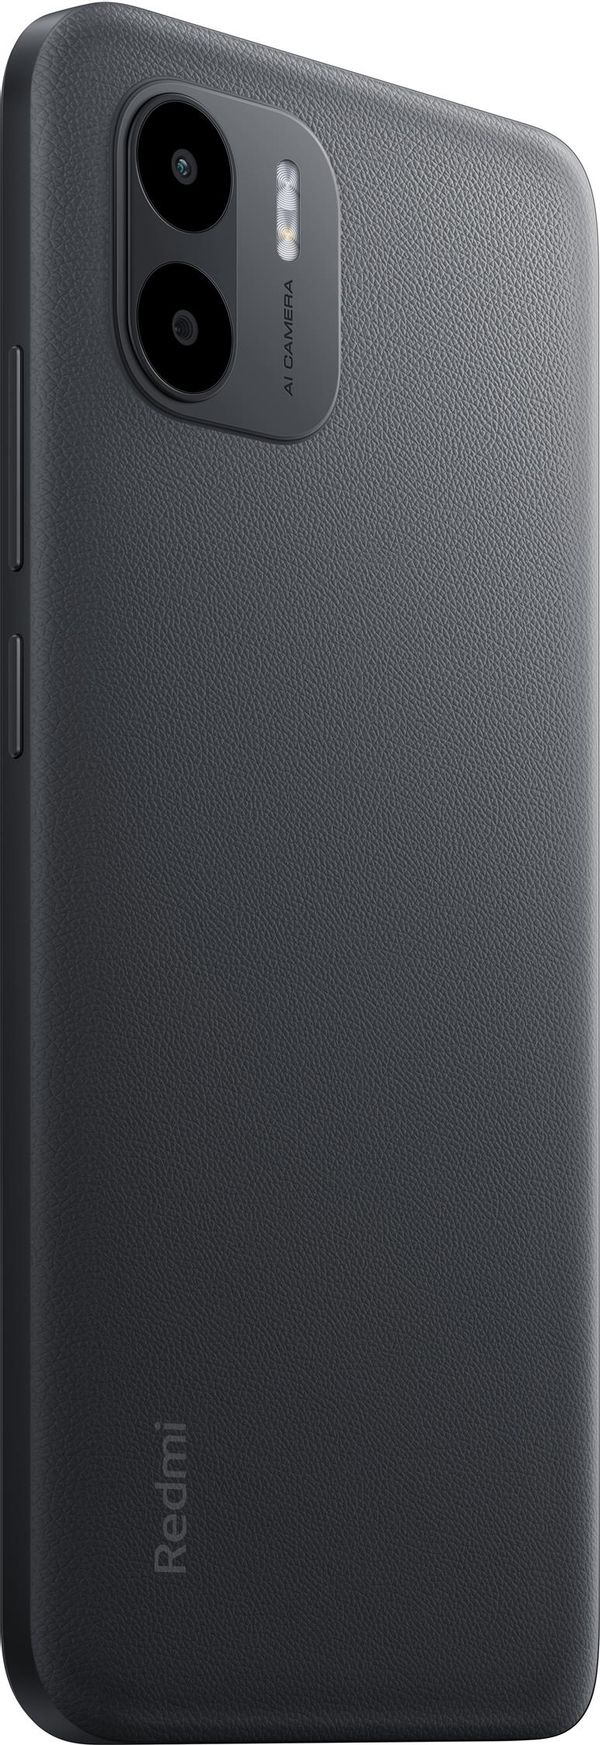 Smartphone Xiaomi Redmi A2 2GB 32GB Negro